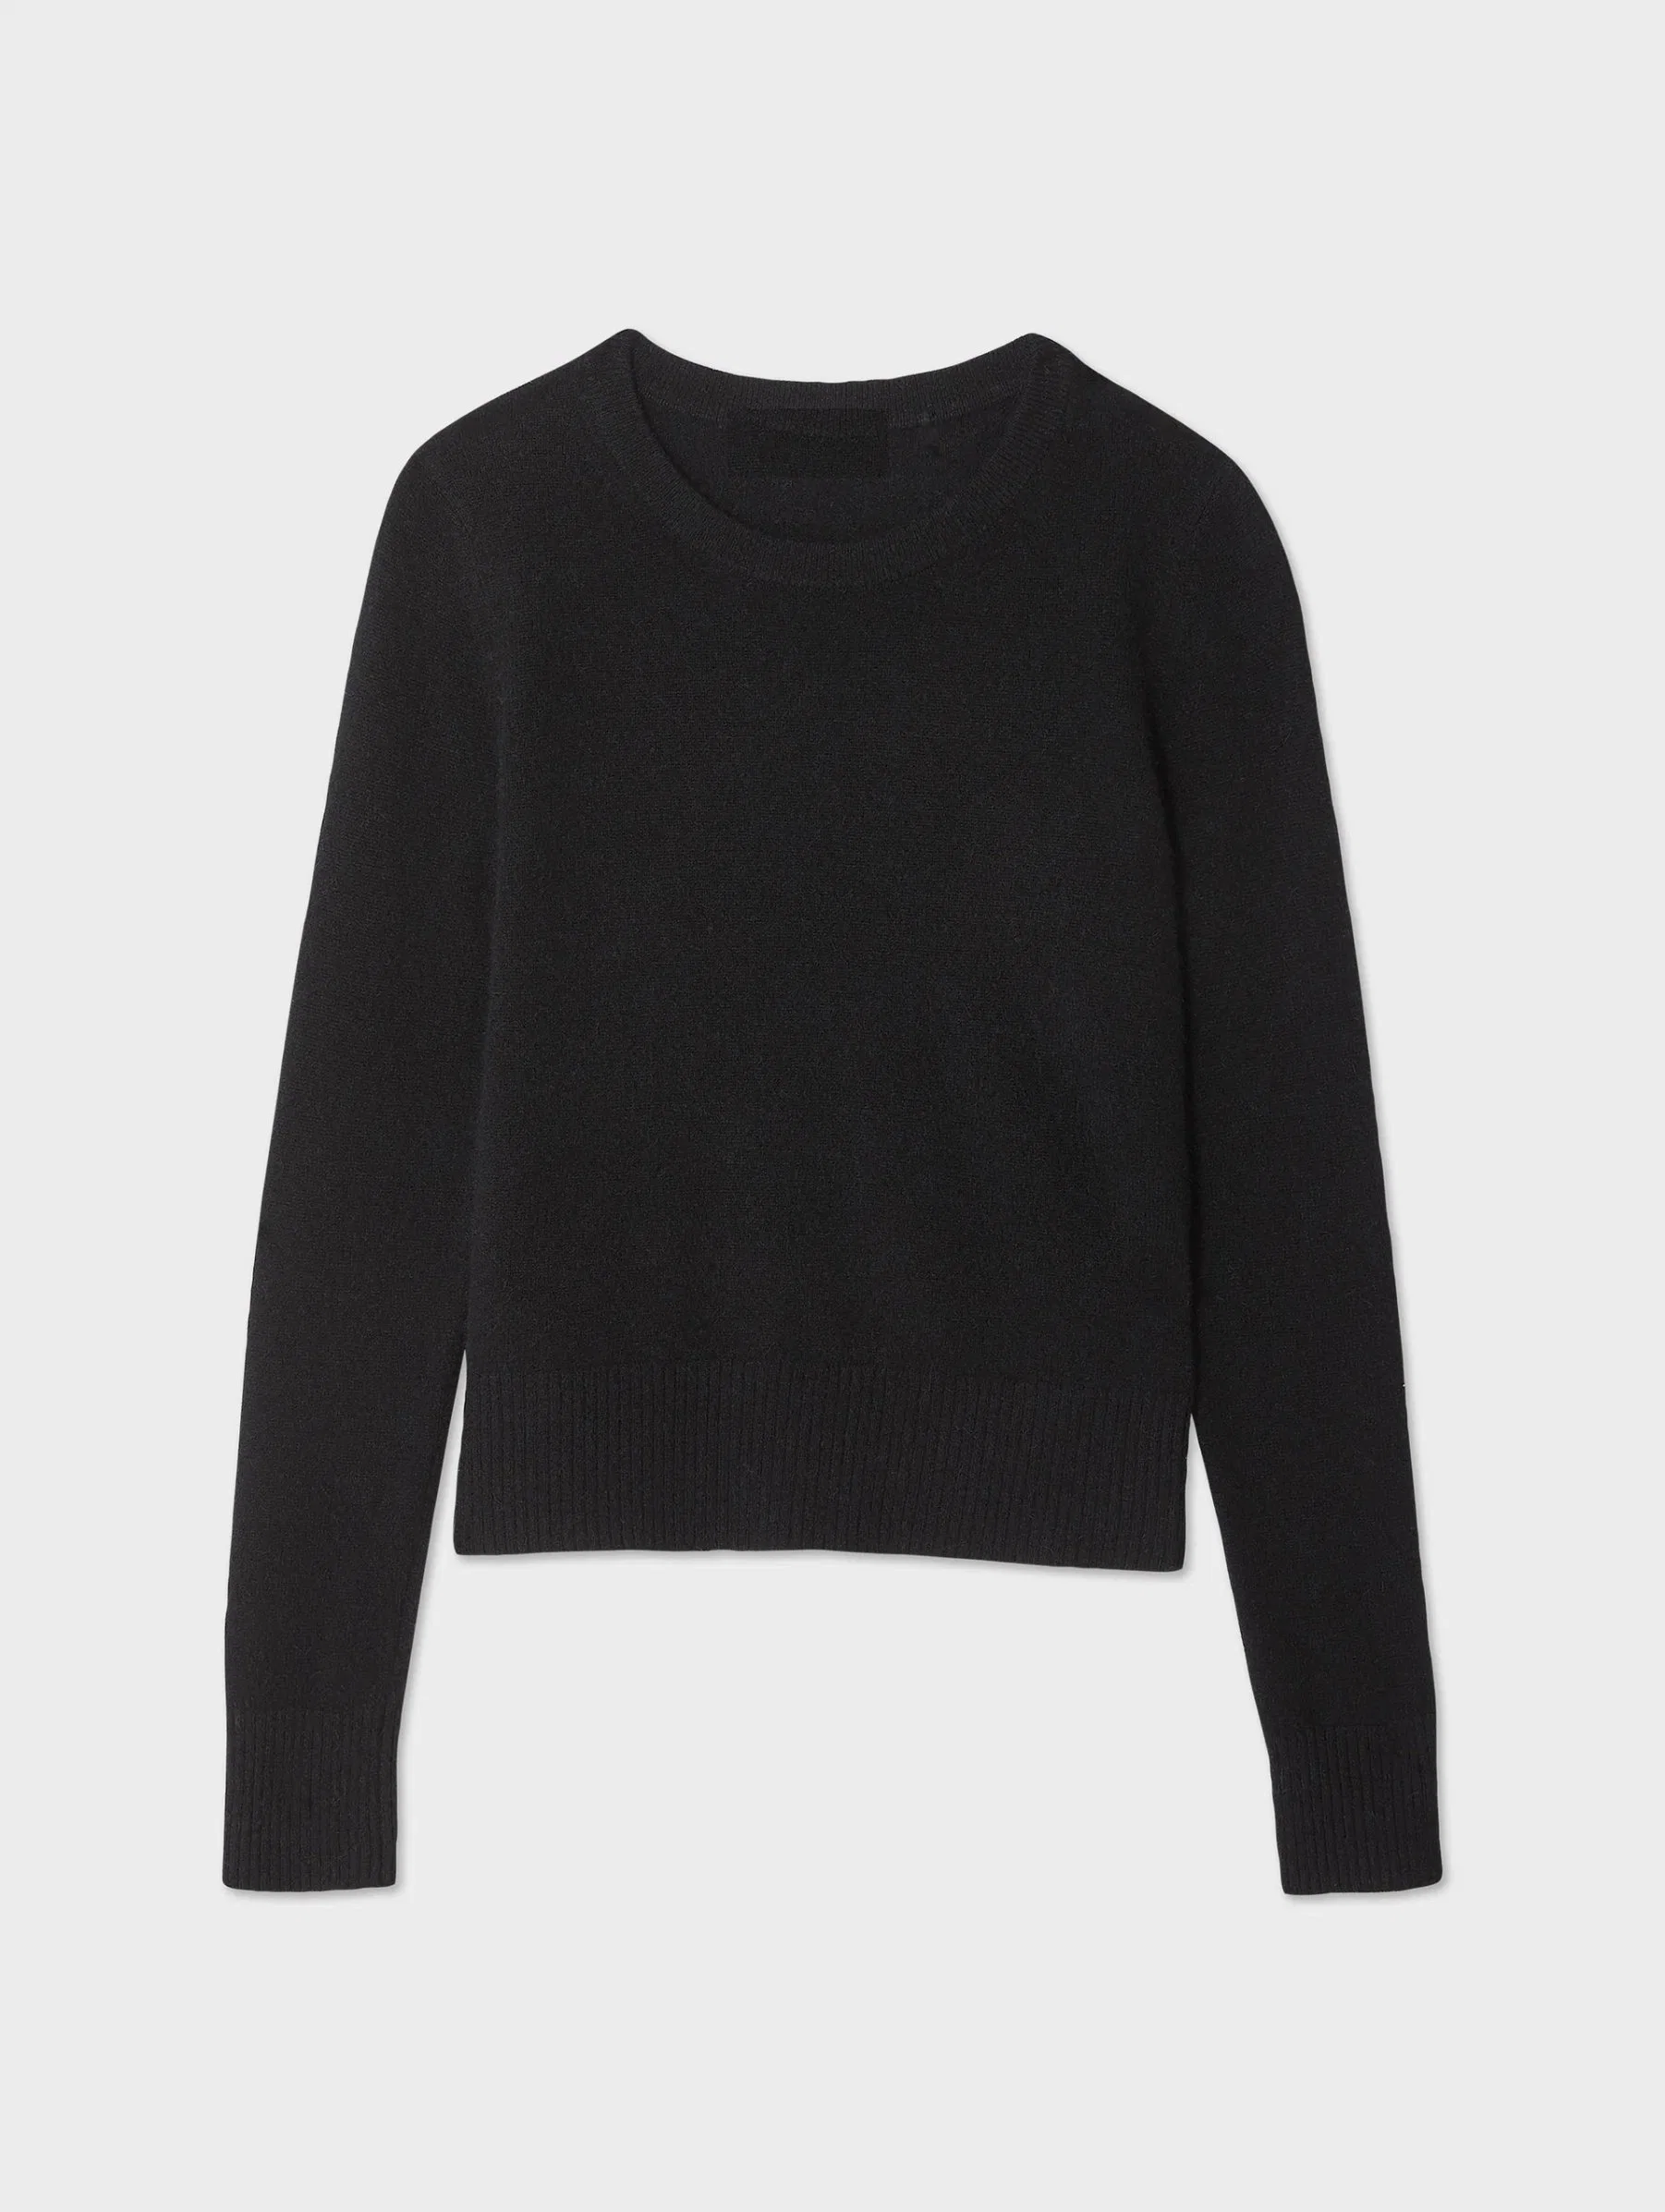 100% Cashmere Crew Neck Classic & Simple Designed Pullover Sweater